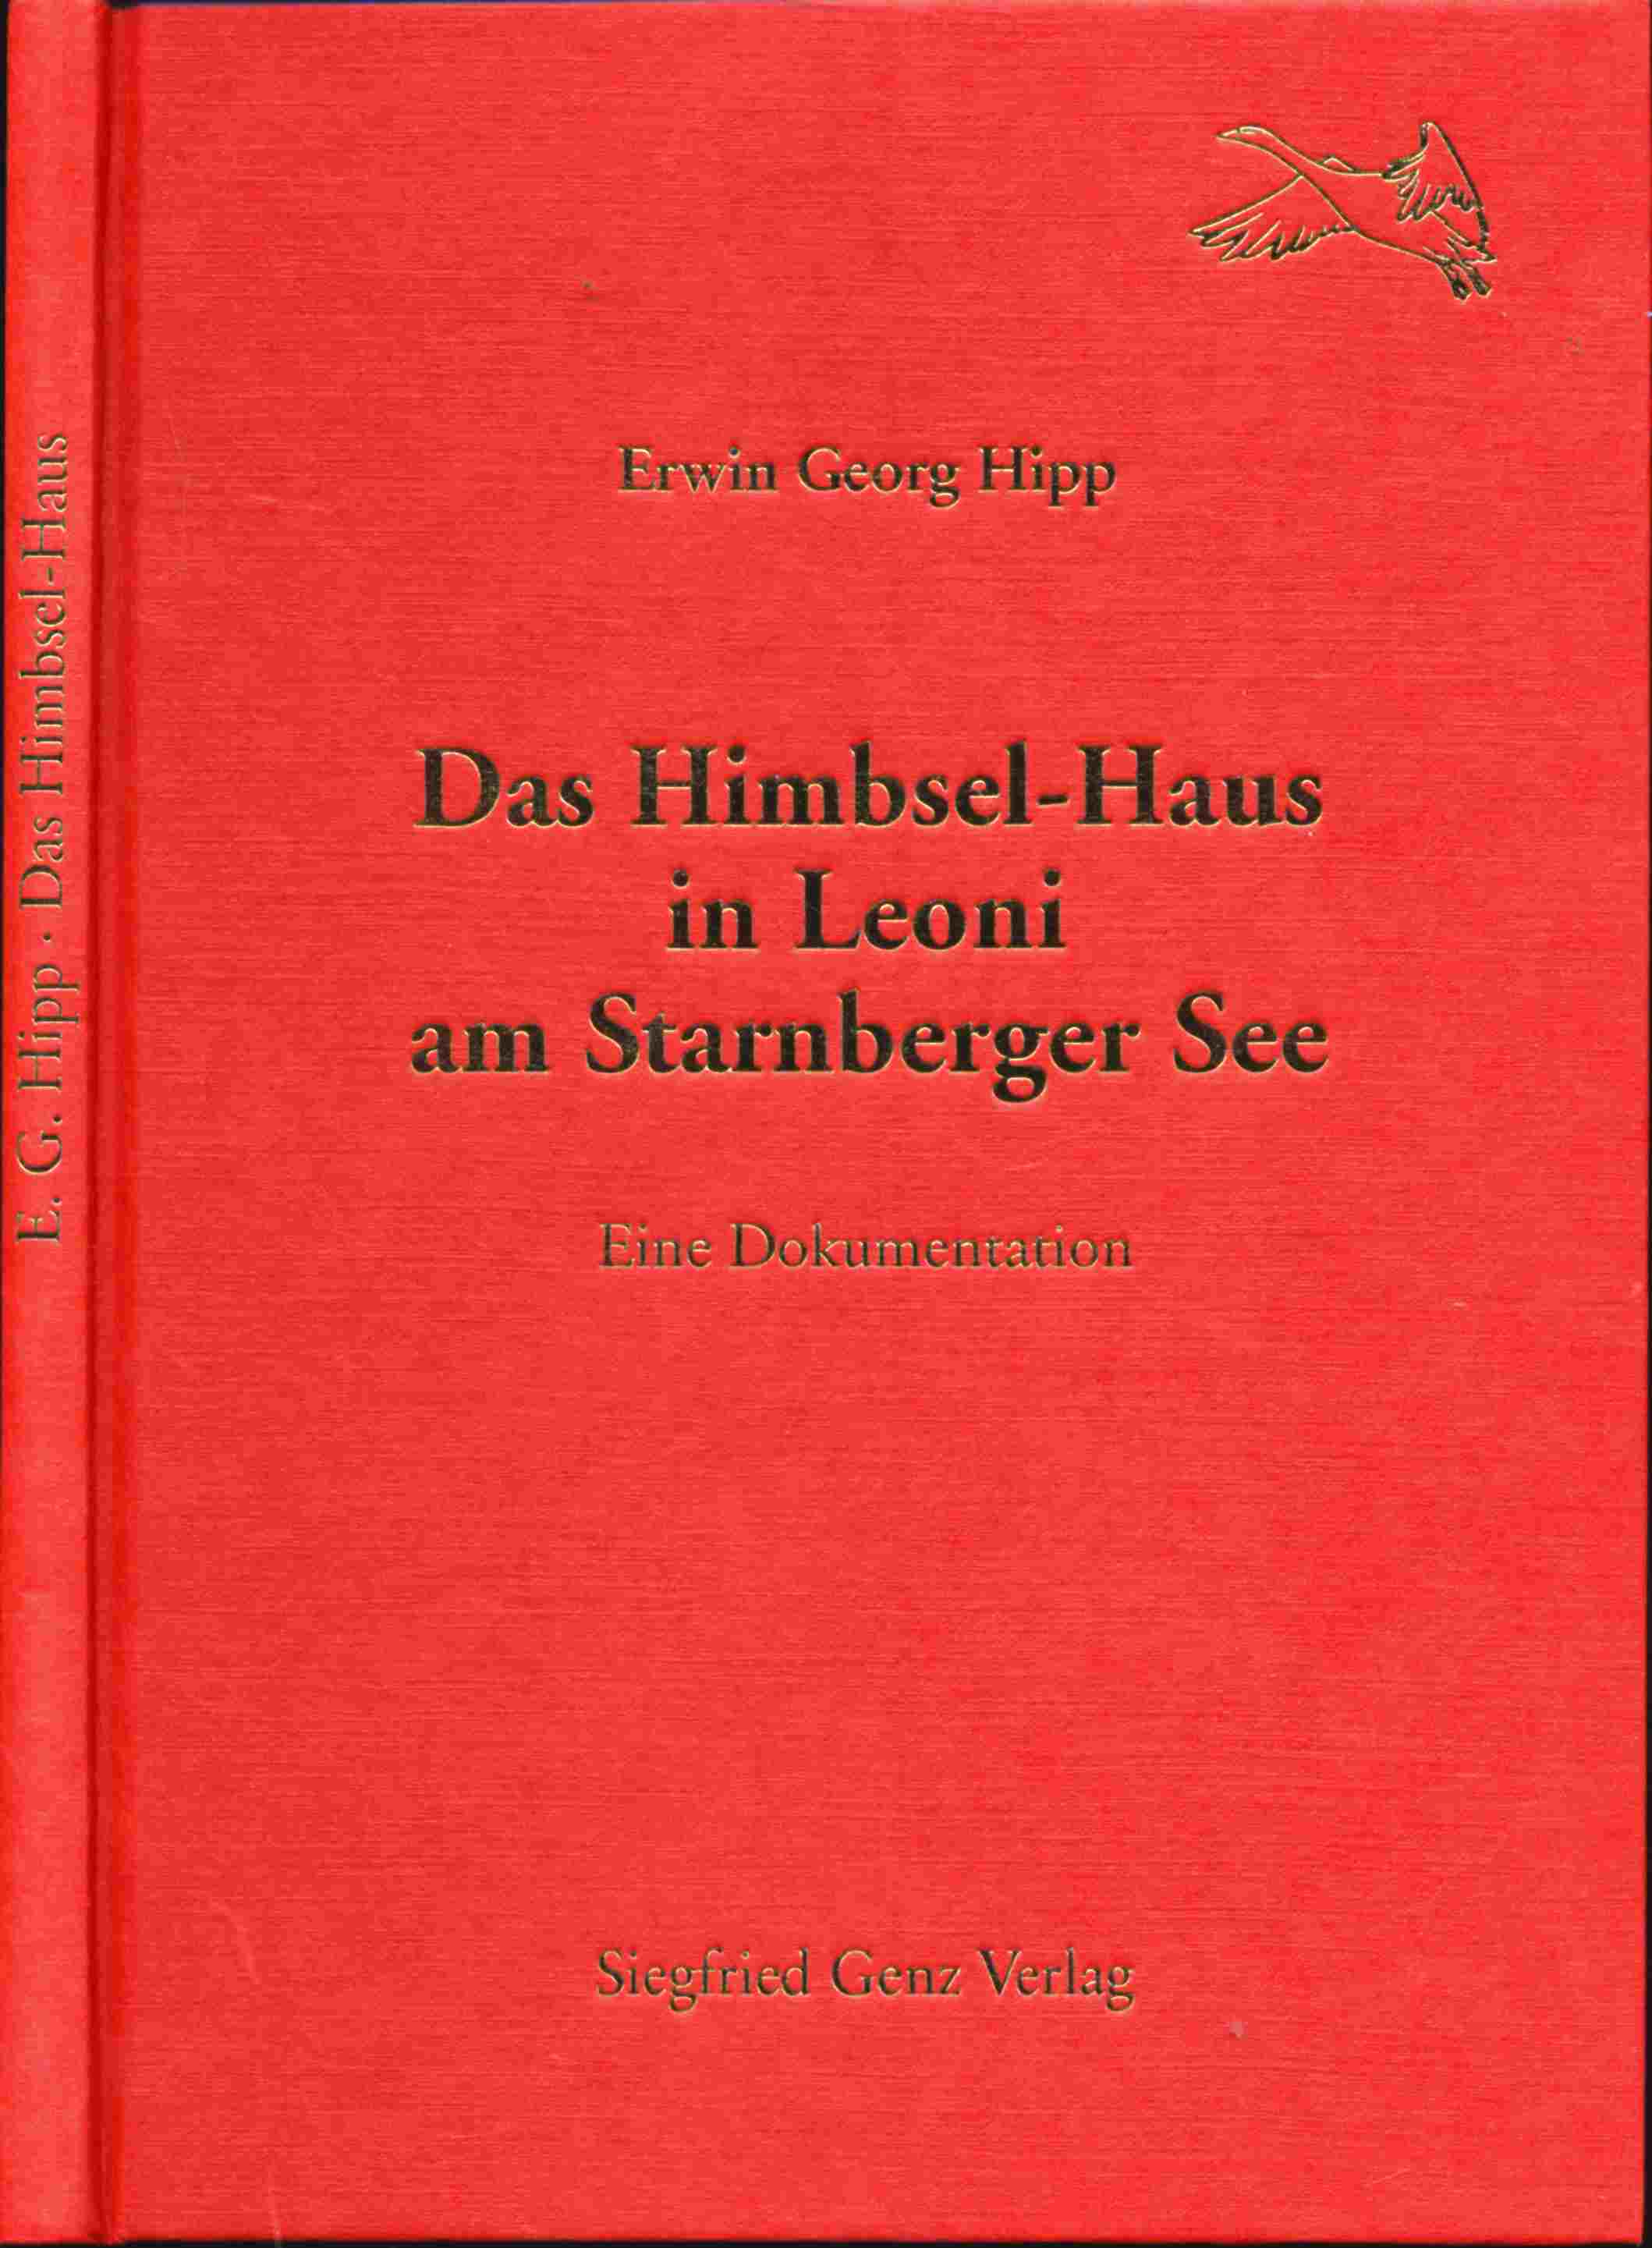 HIPP, Erwin Georg  Das Himbsel-Haus in Leoni am Starnberger See. Eine Dokumentation. 